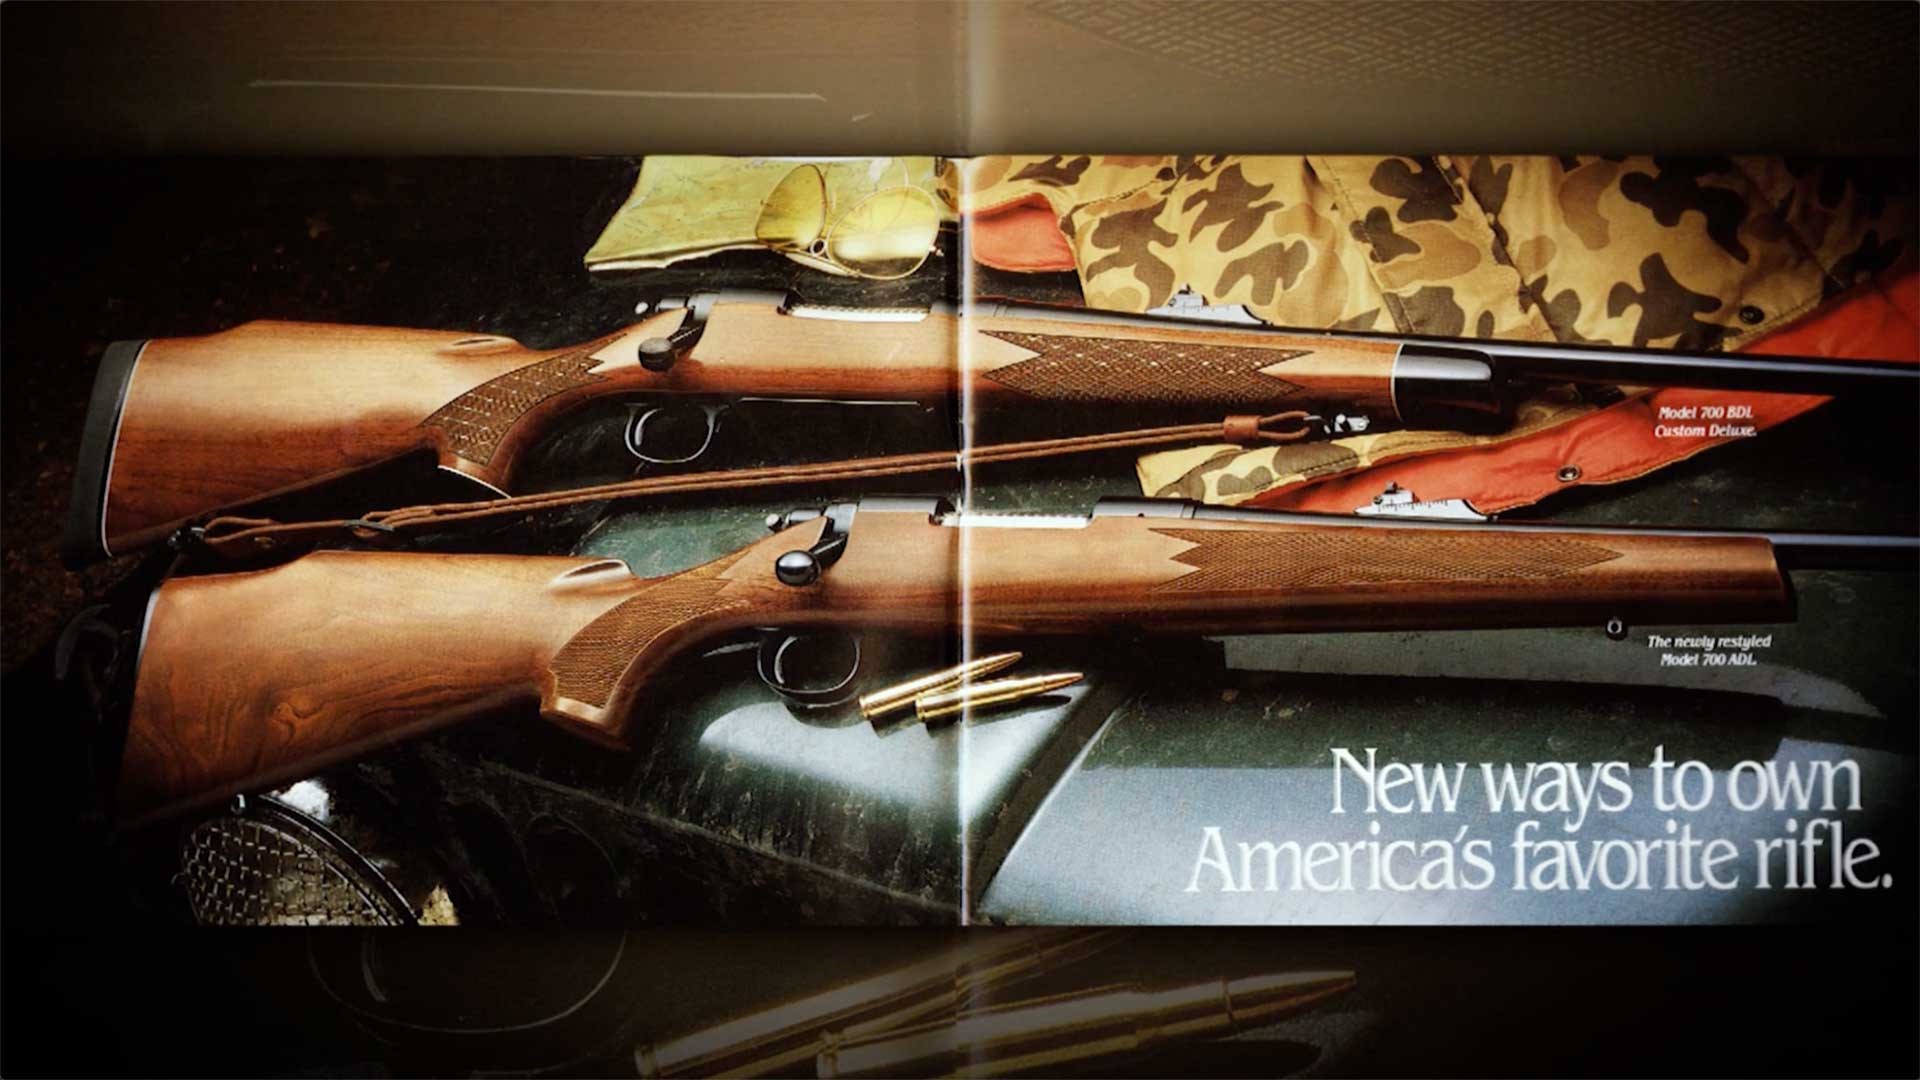 Magazine illustration of the Remington 700 ADL and BDL rifle models.